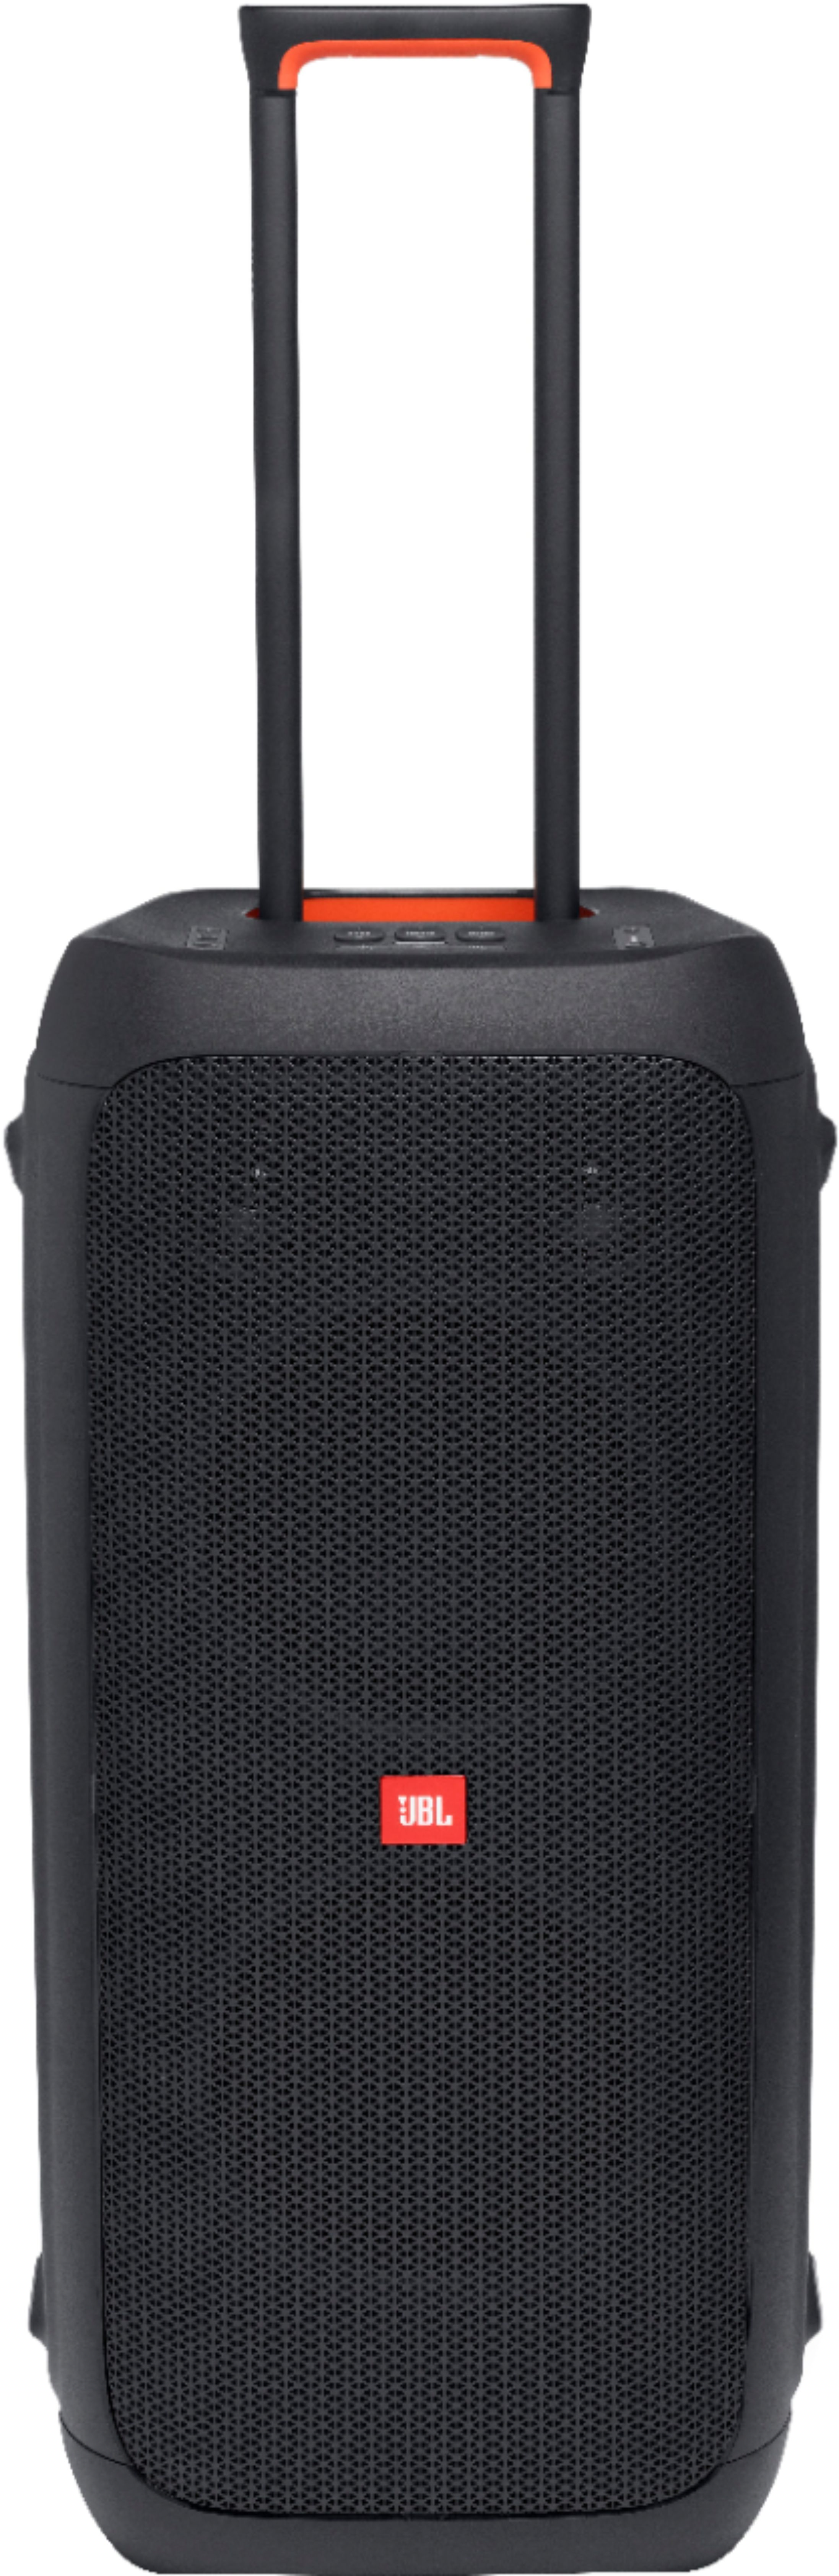 JBL PartyBox 310 Portable Bluetooth Speaker in Black